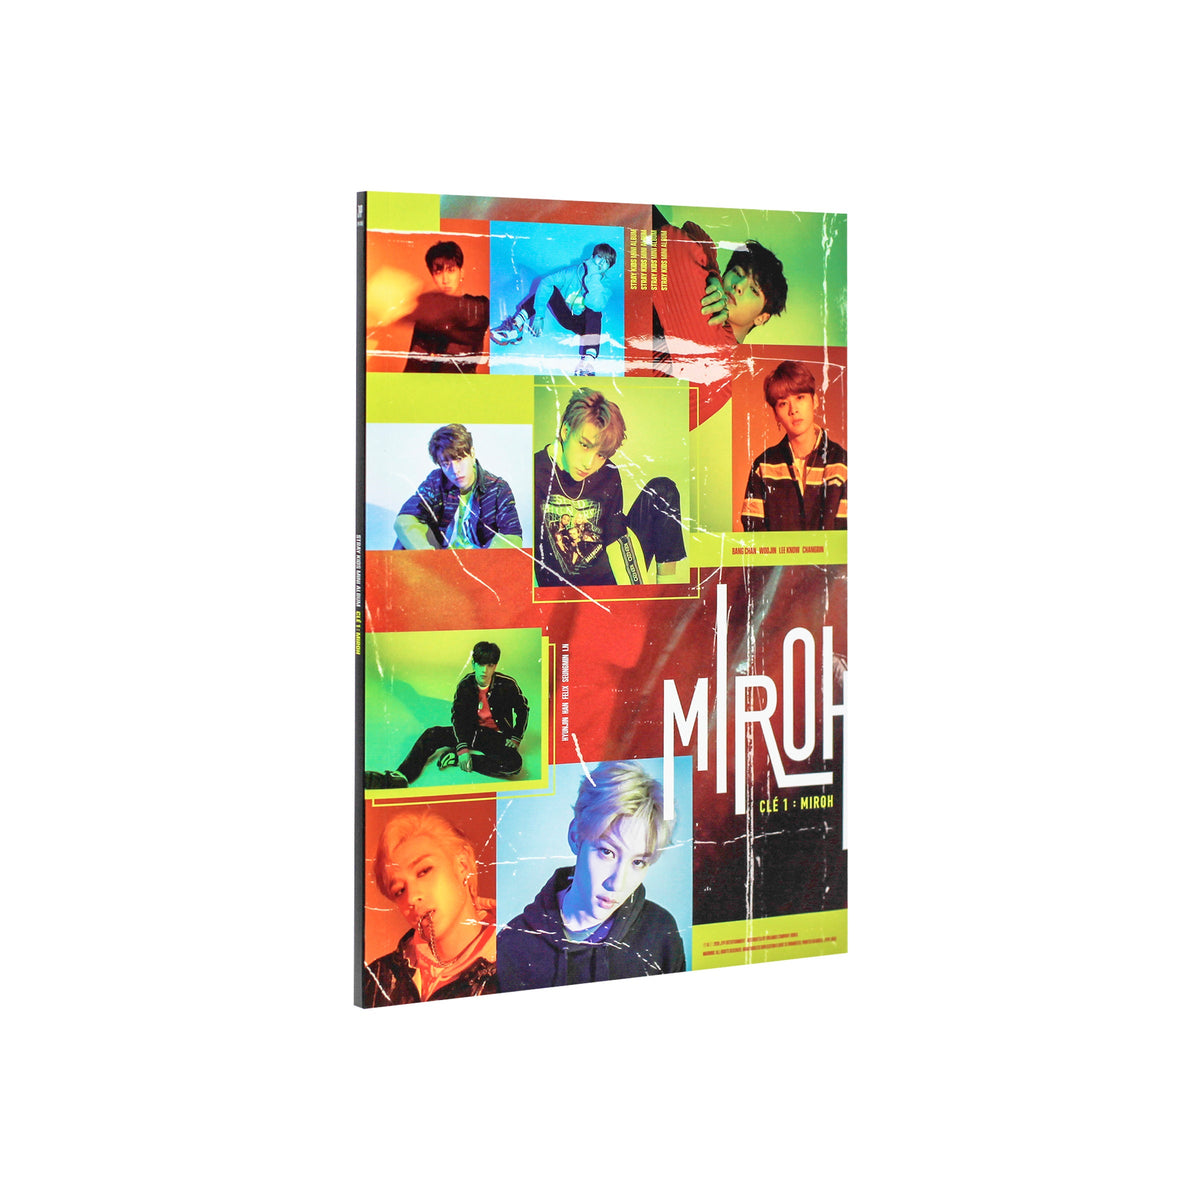 Stray Kids Clé 1 MIROH 4th Mini Album Miroh Ver Main Cover Image 2